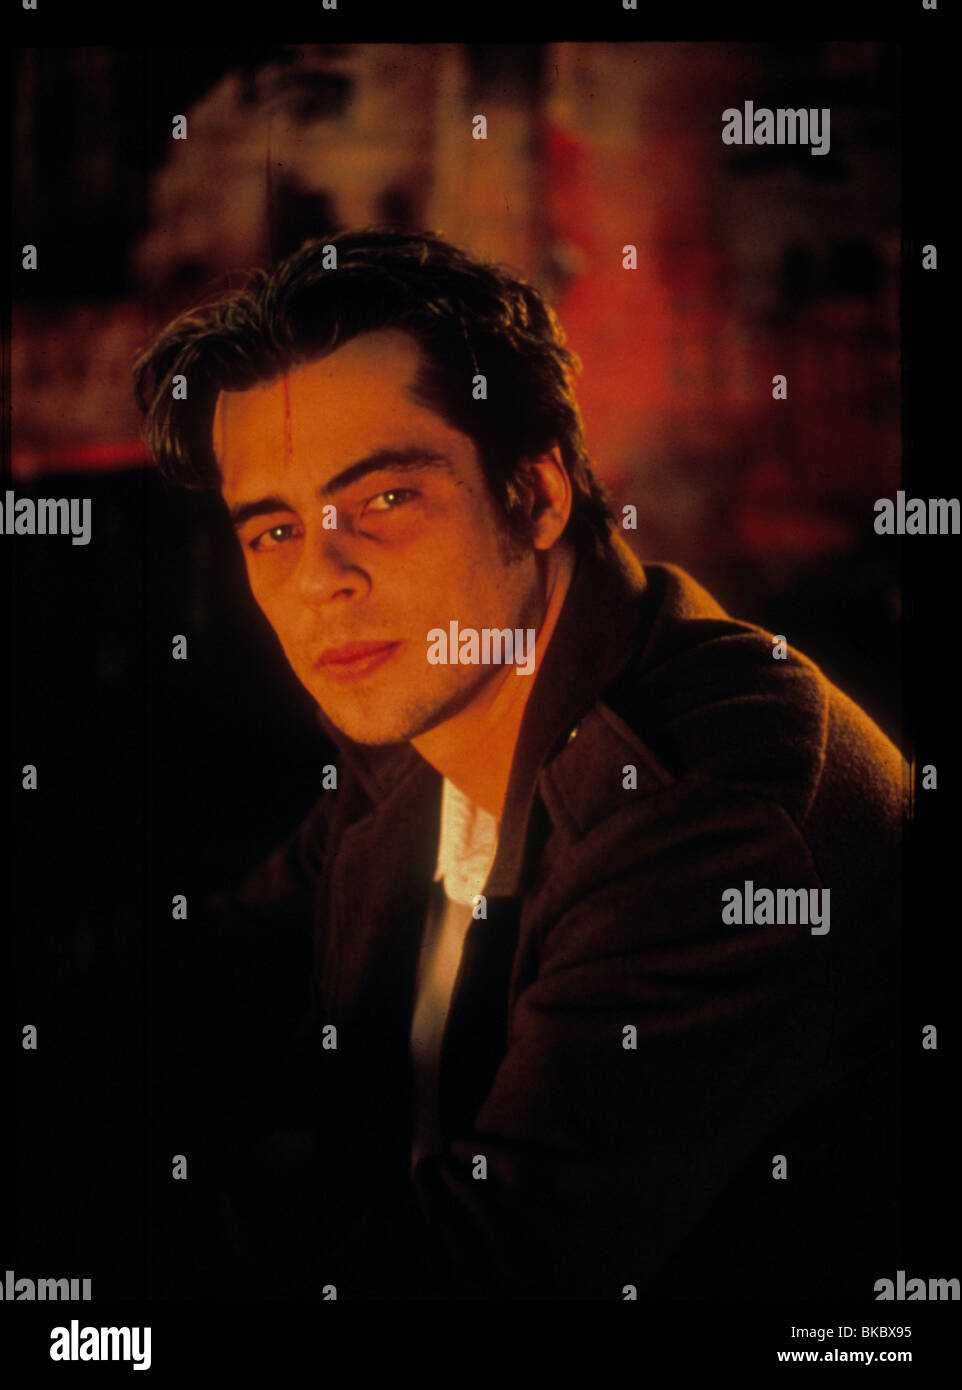 The Way Of The Gun 00 Benicio Del Toro Wotg 008 Movietsore Collection Ltd Stock Photo Alamy